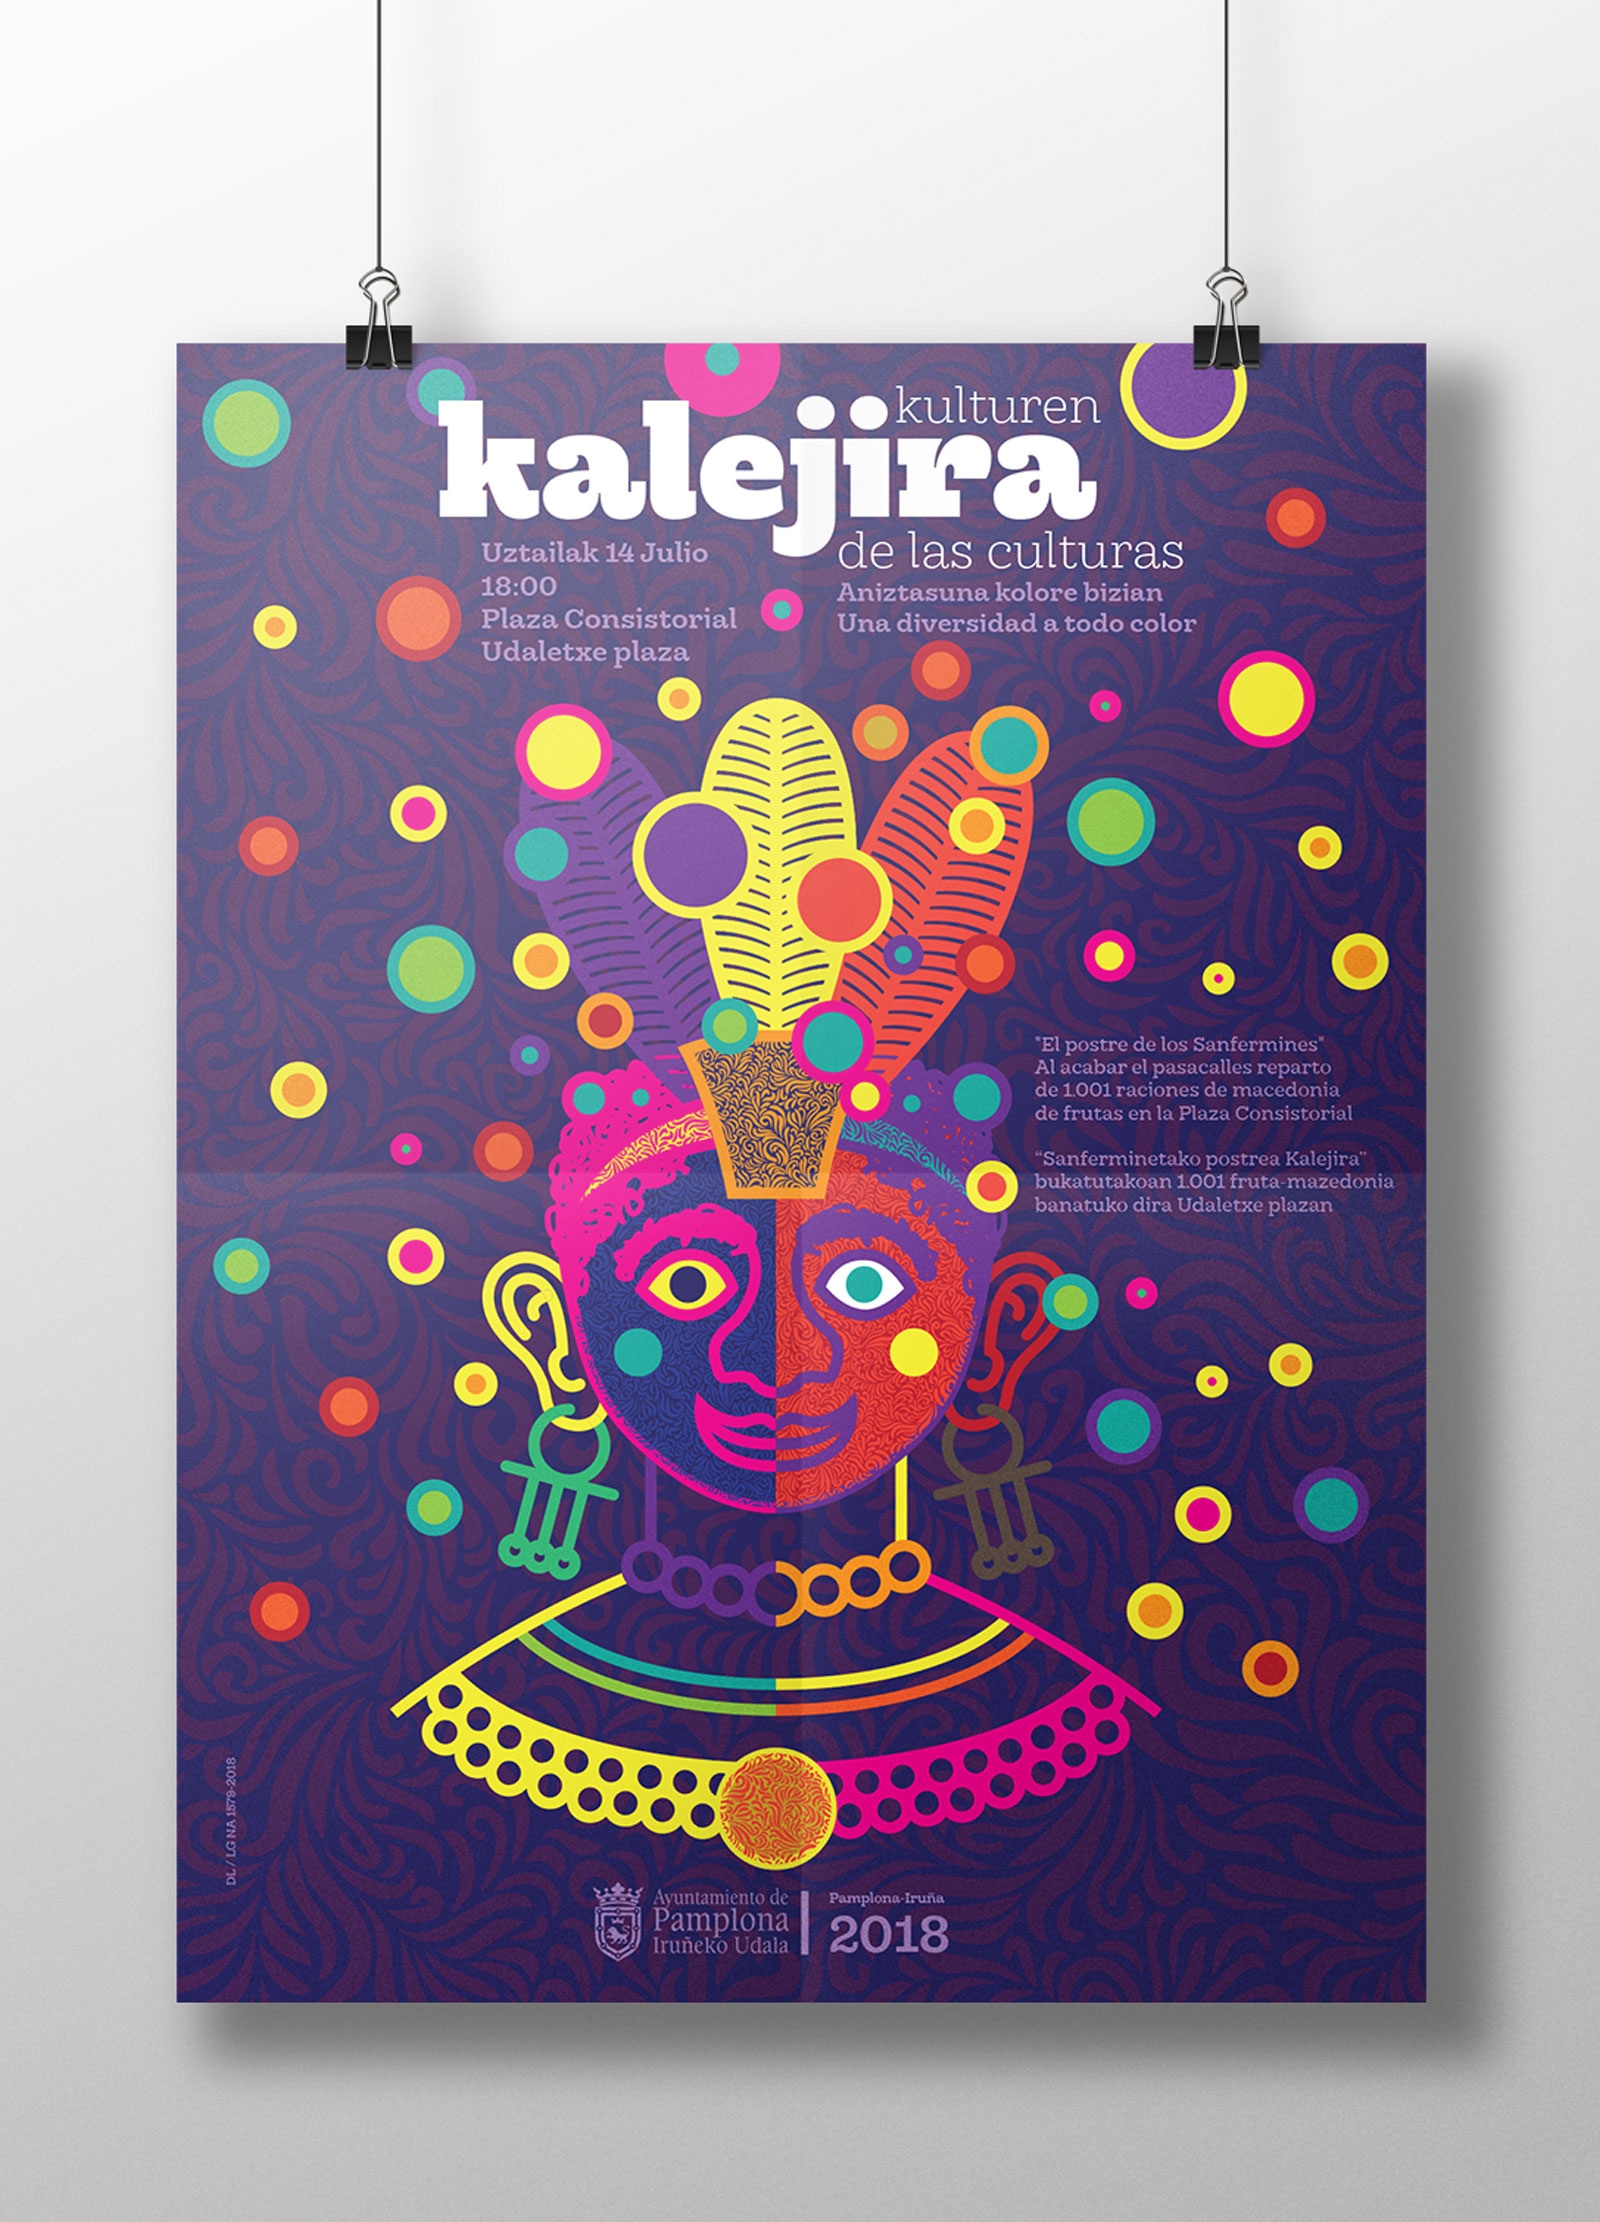 Cartel para la iniciativa "Kulturen kalejira de las culturas"